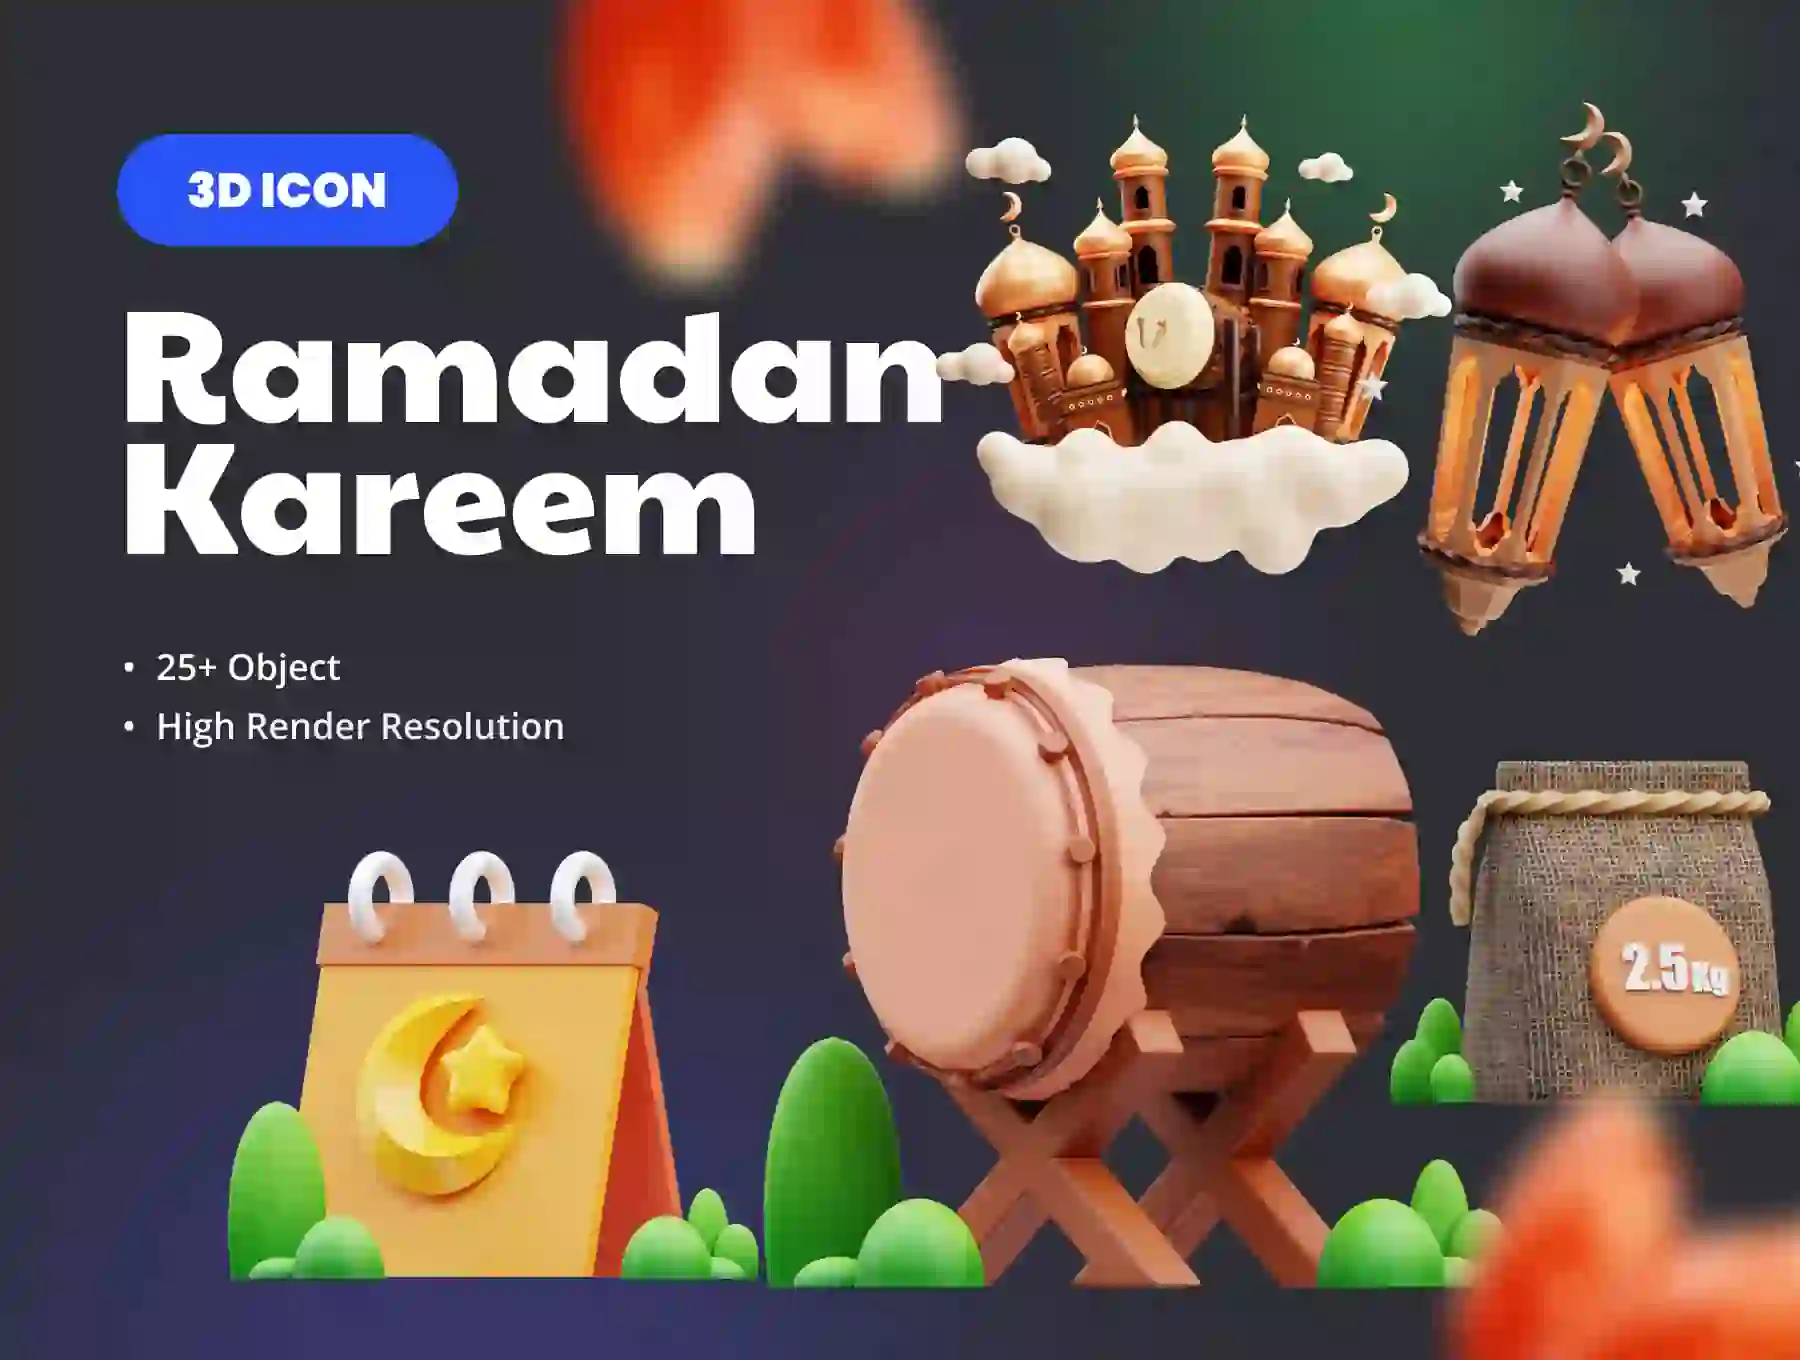 Ramadan 3D Icons